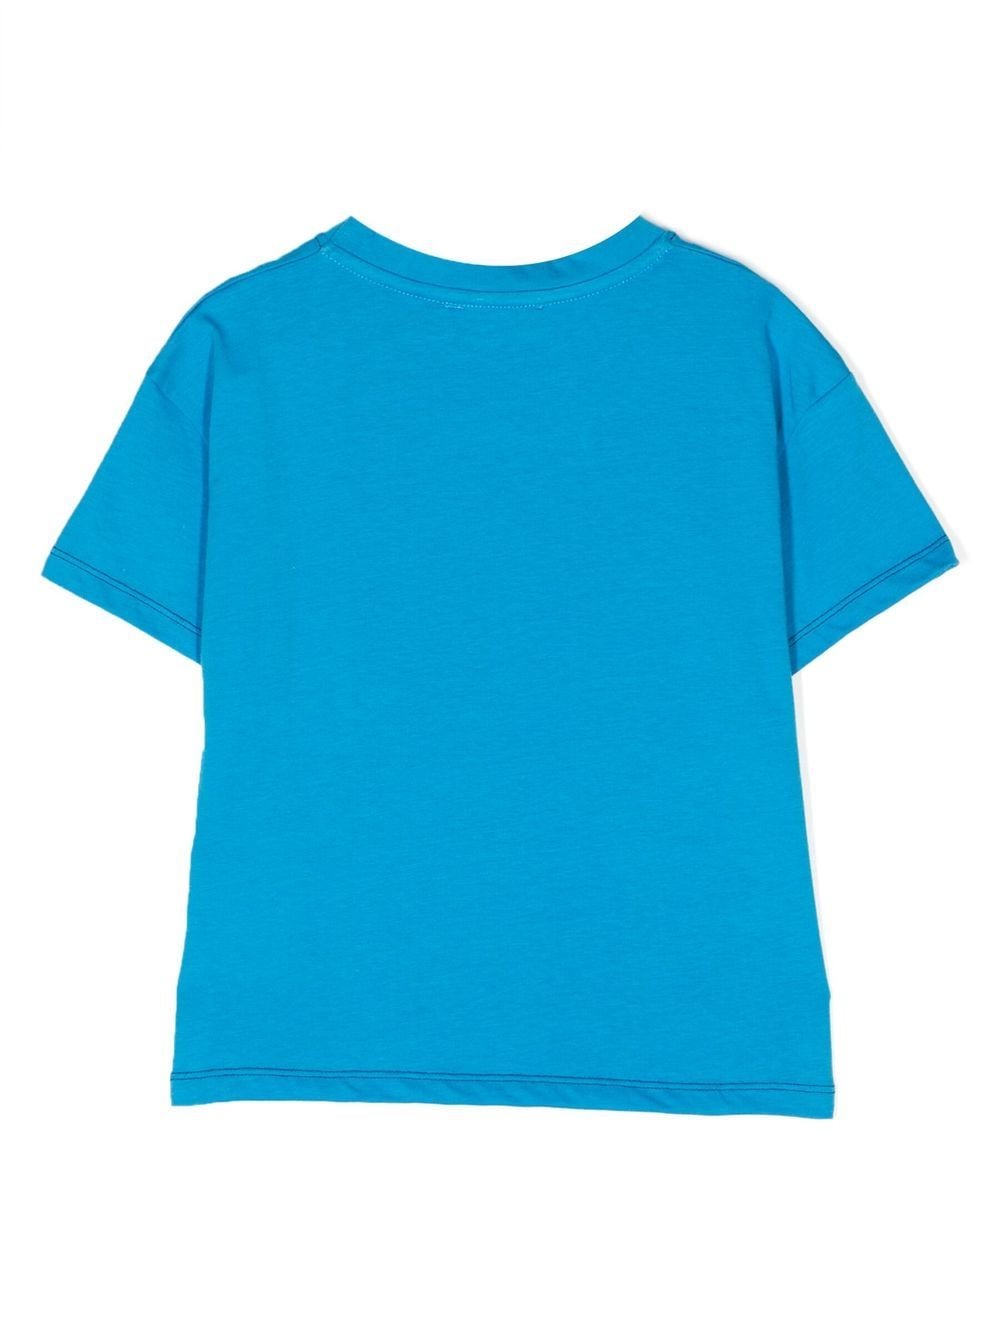 KINDRED contrast-stitch short-sleeve T-shirt - Farfetch